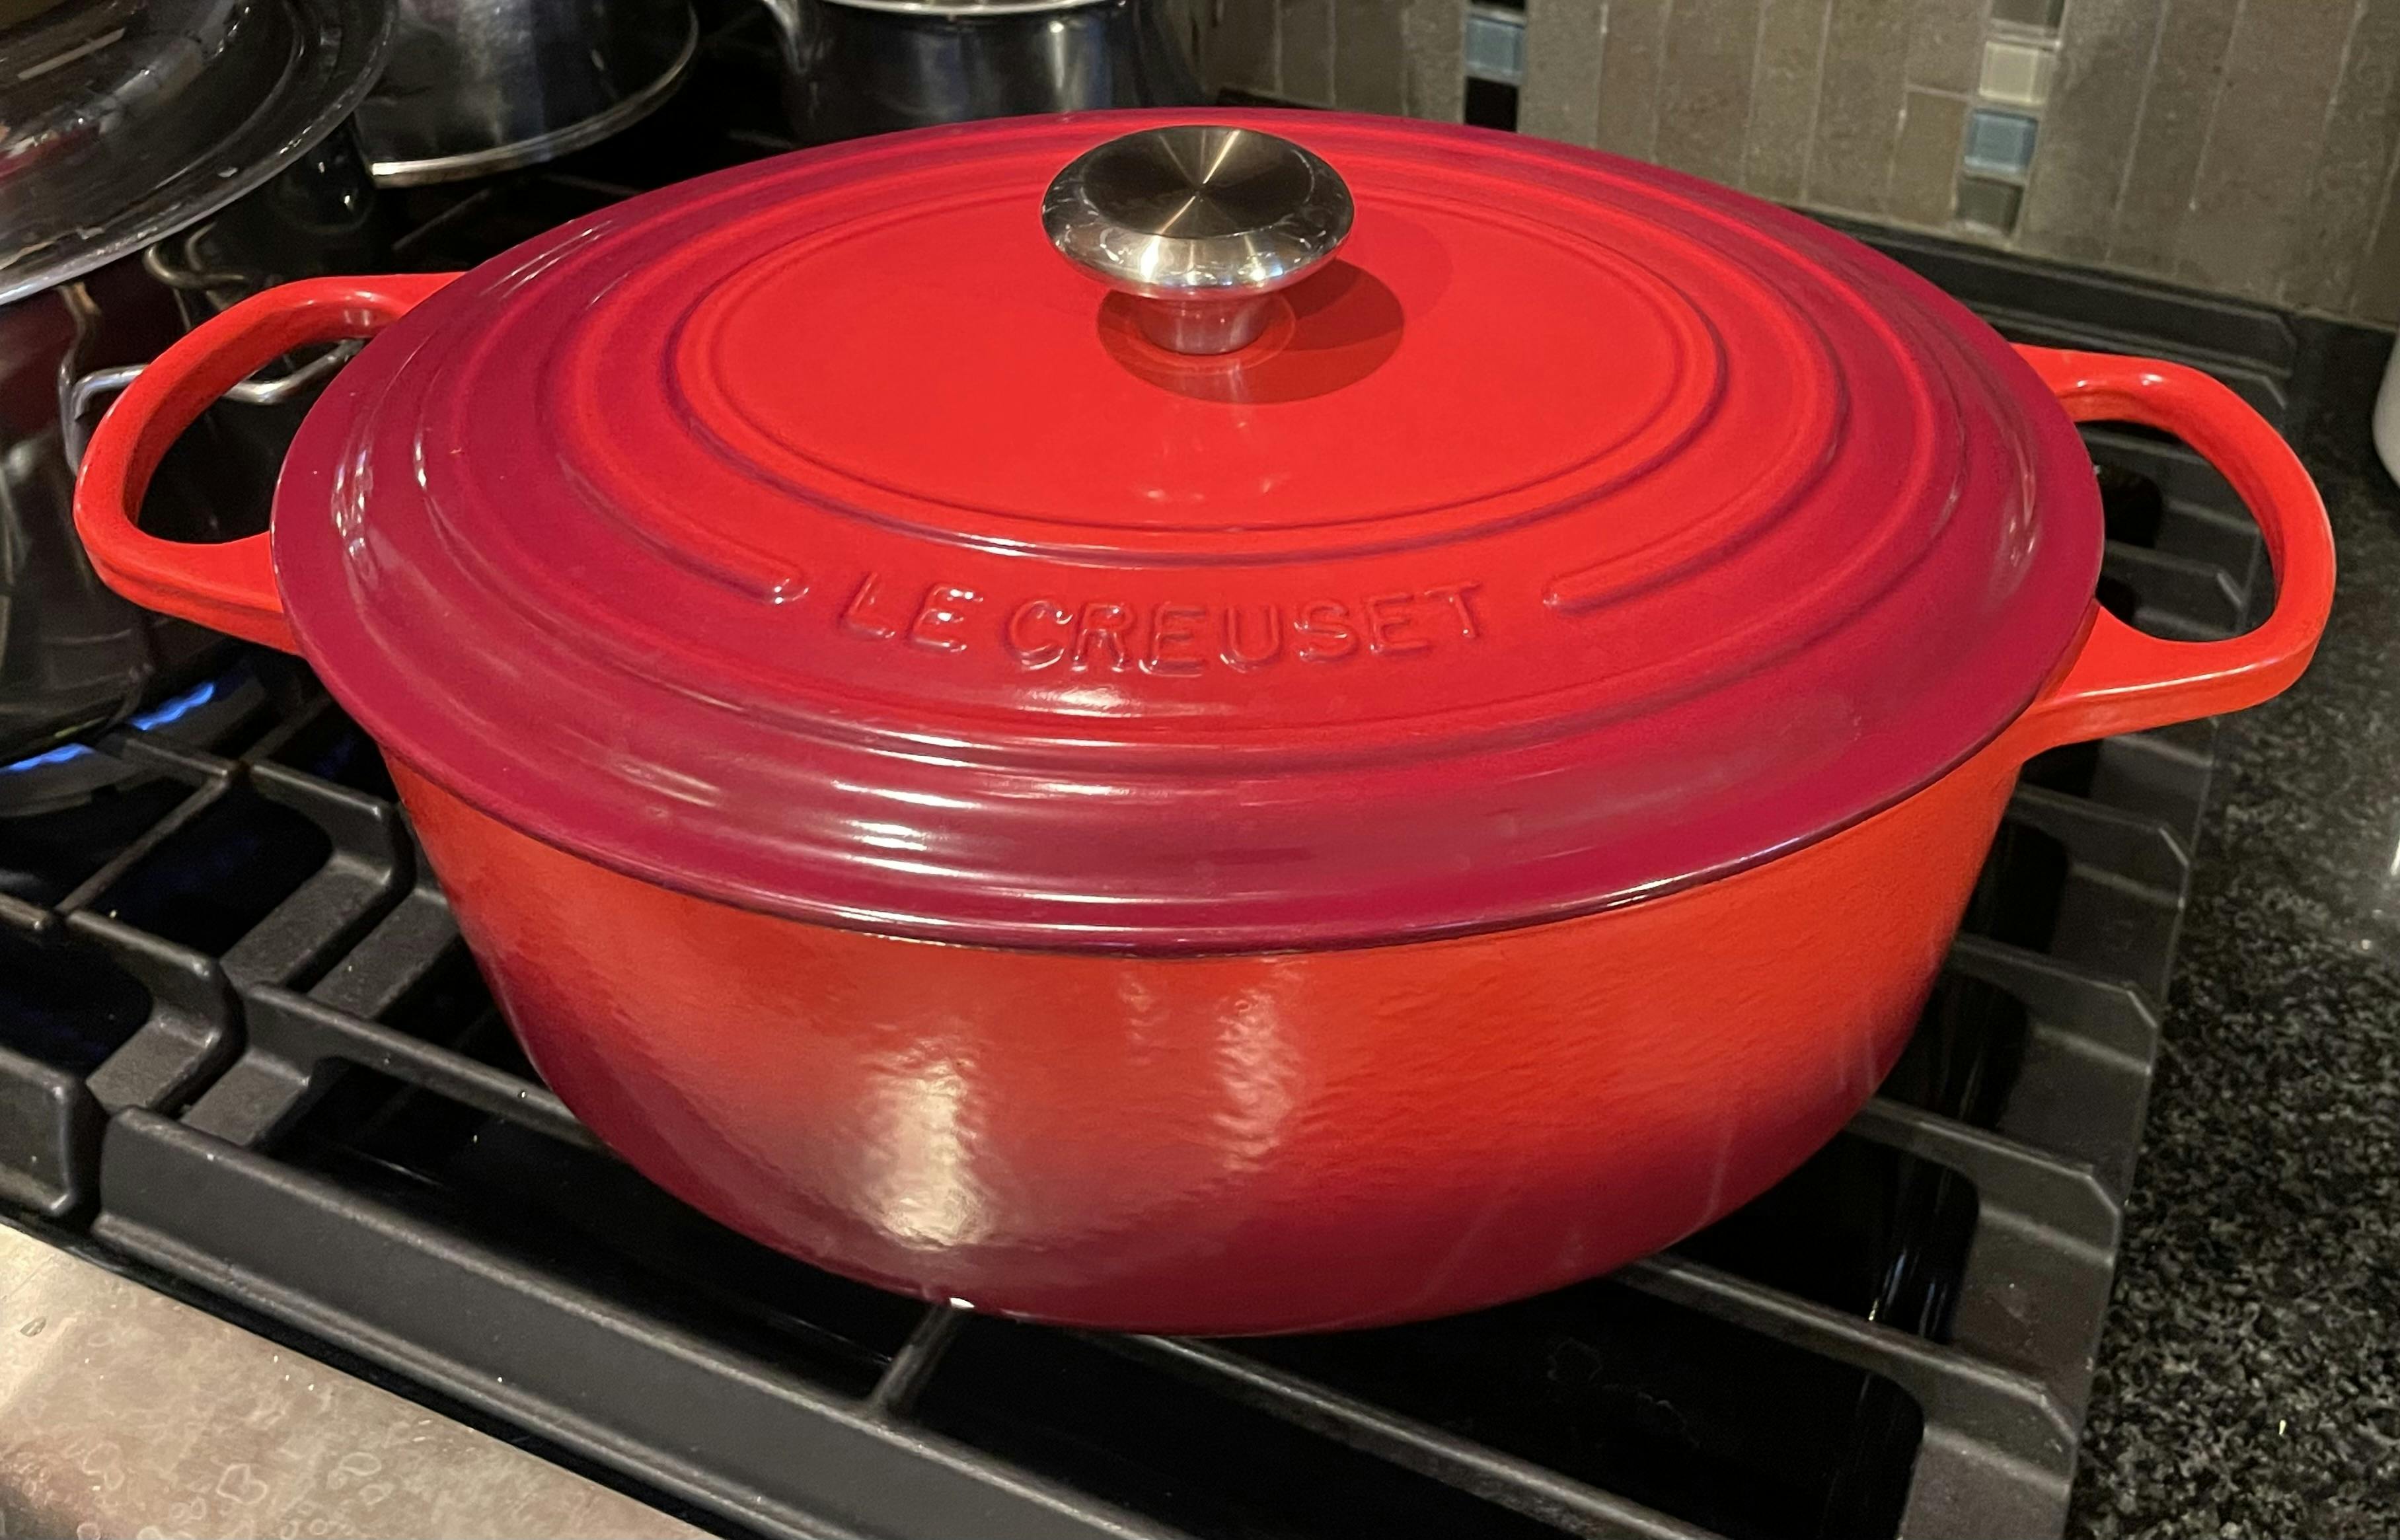 VTG Le Creuset 18 Baking Dish Enamel Cast Iron Small Oval